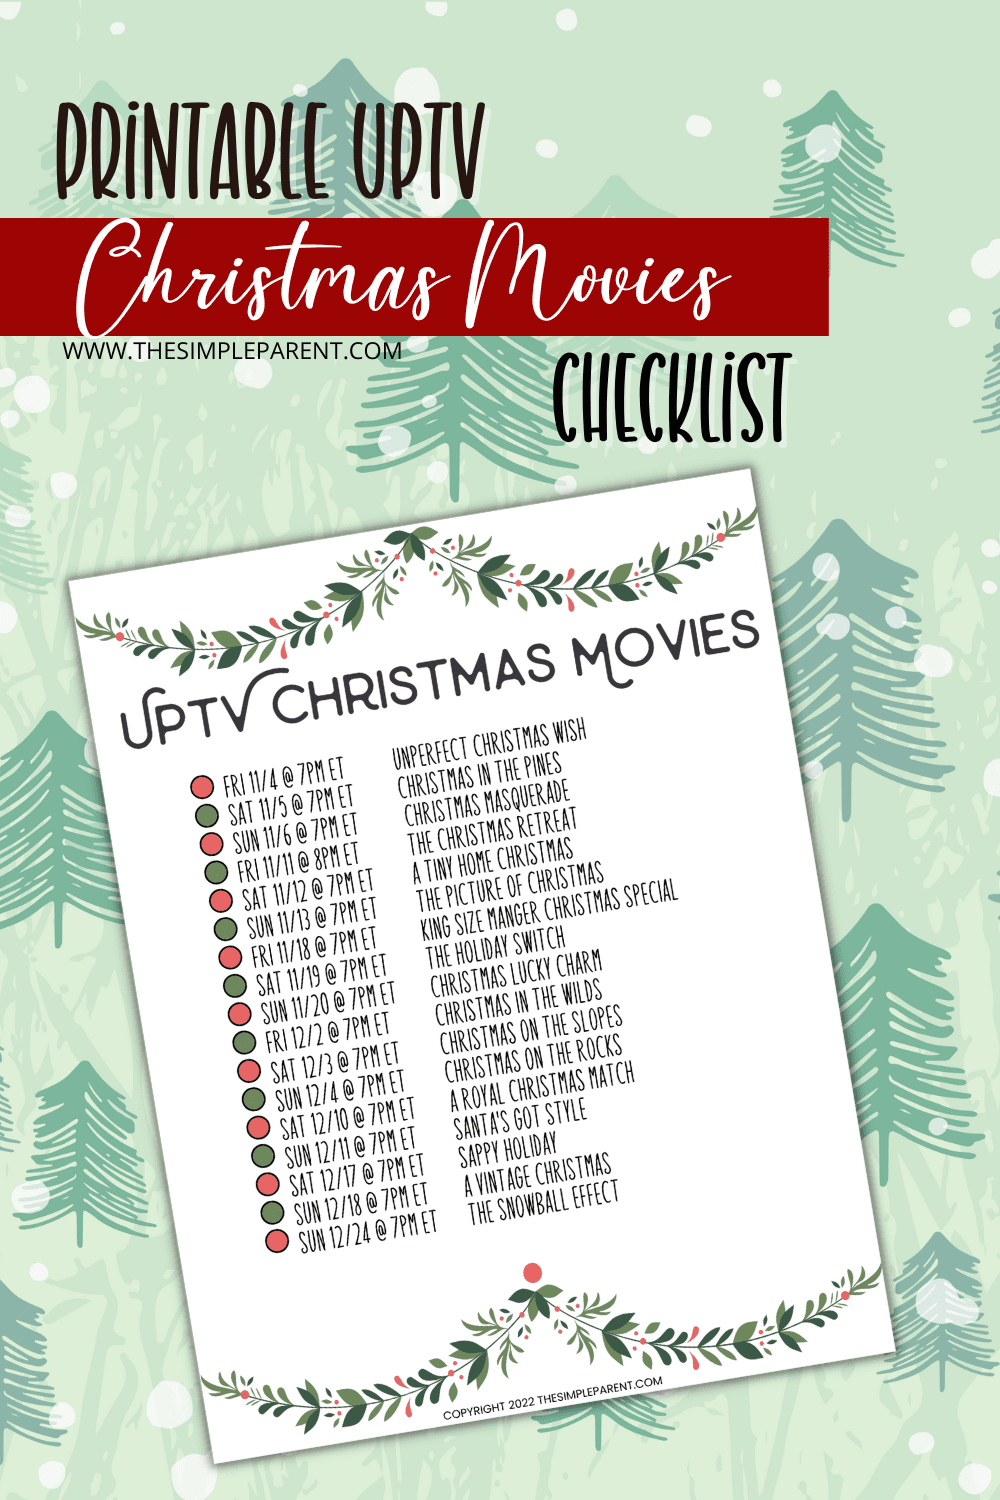 UpTV Christmas Movies Schedule